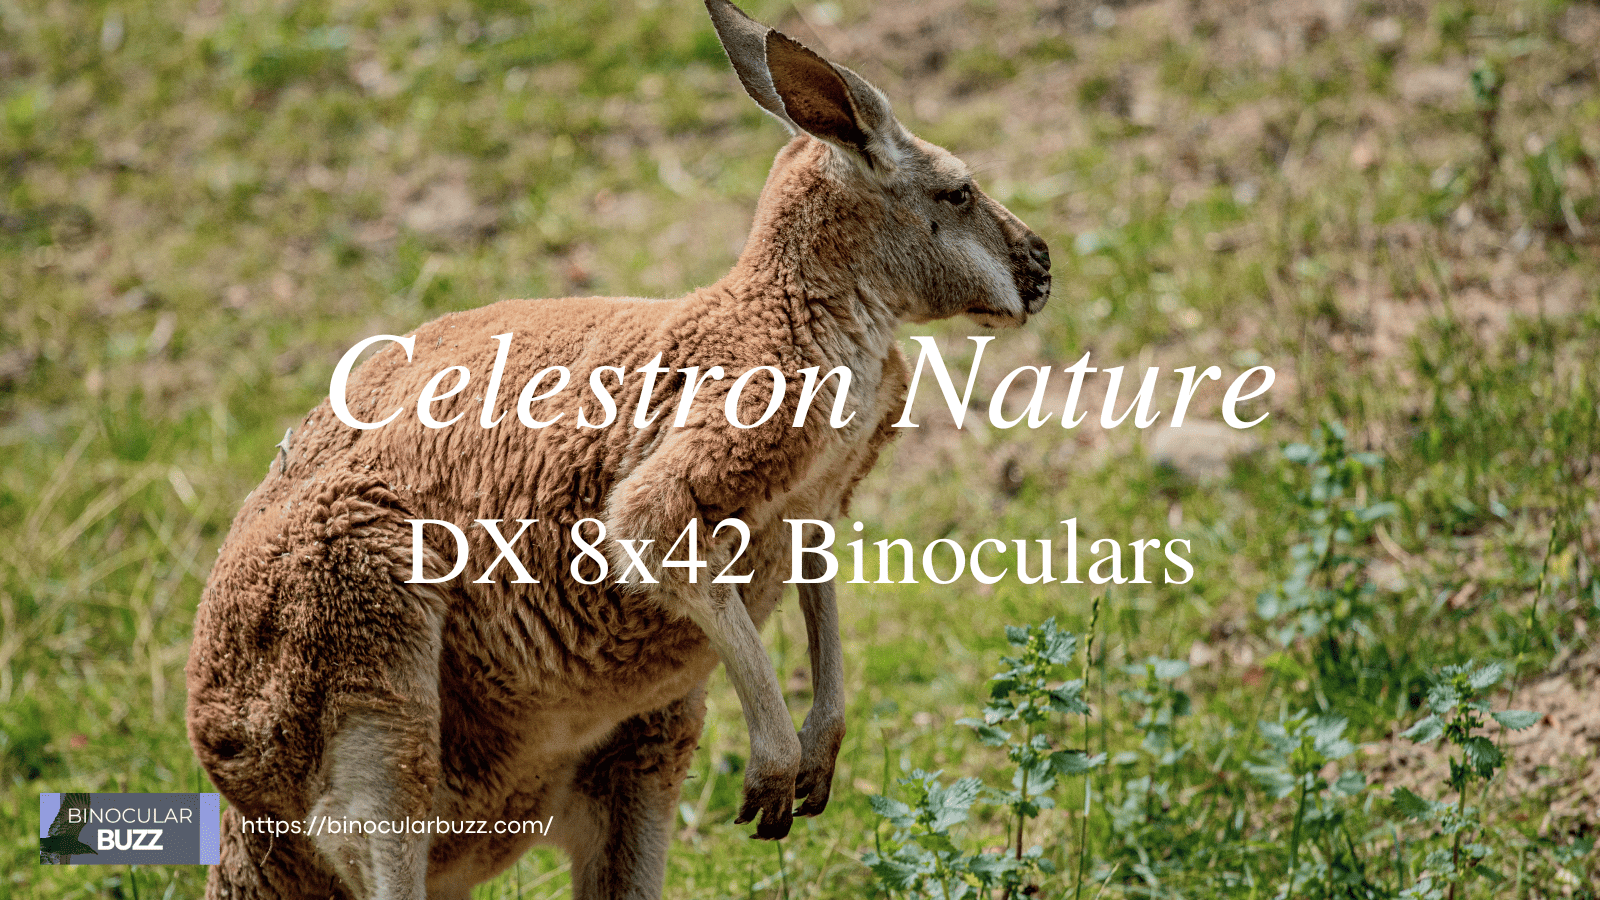 Celestron Nature DX 8x42 Binoculars Review